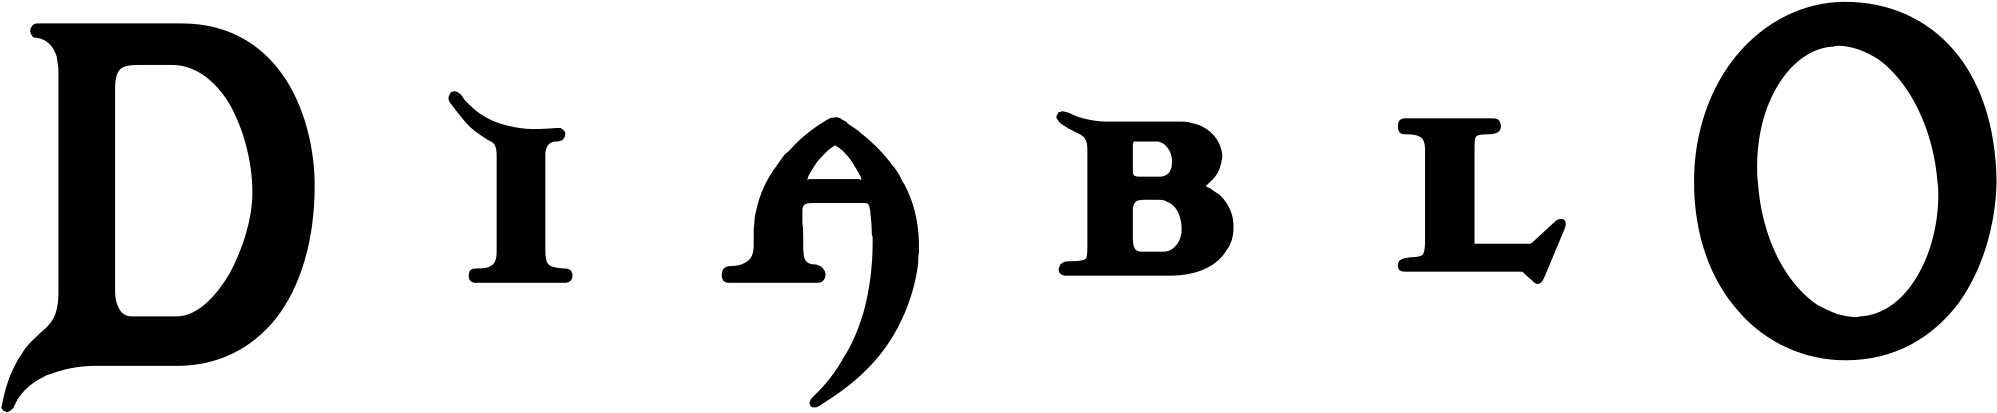 Diablo II Logo PNG Picture